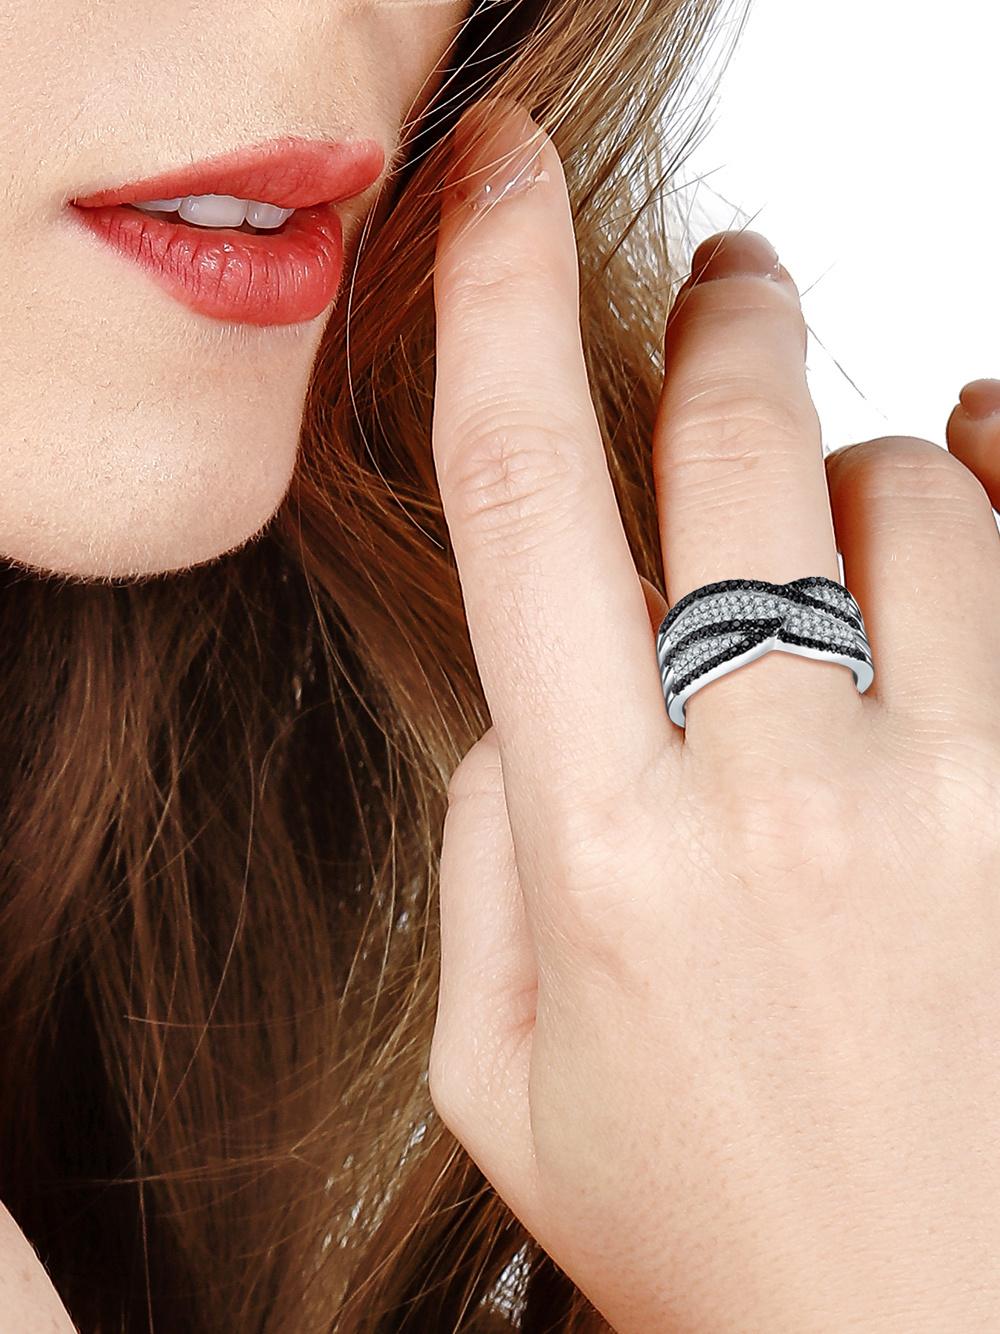 Black CZ Cross Silver Ring Fashion Jewelry Set for Women